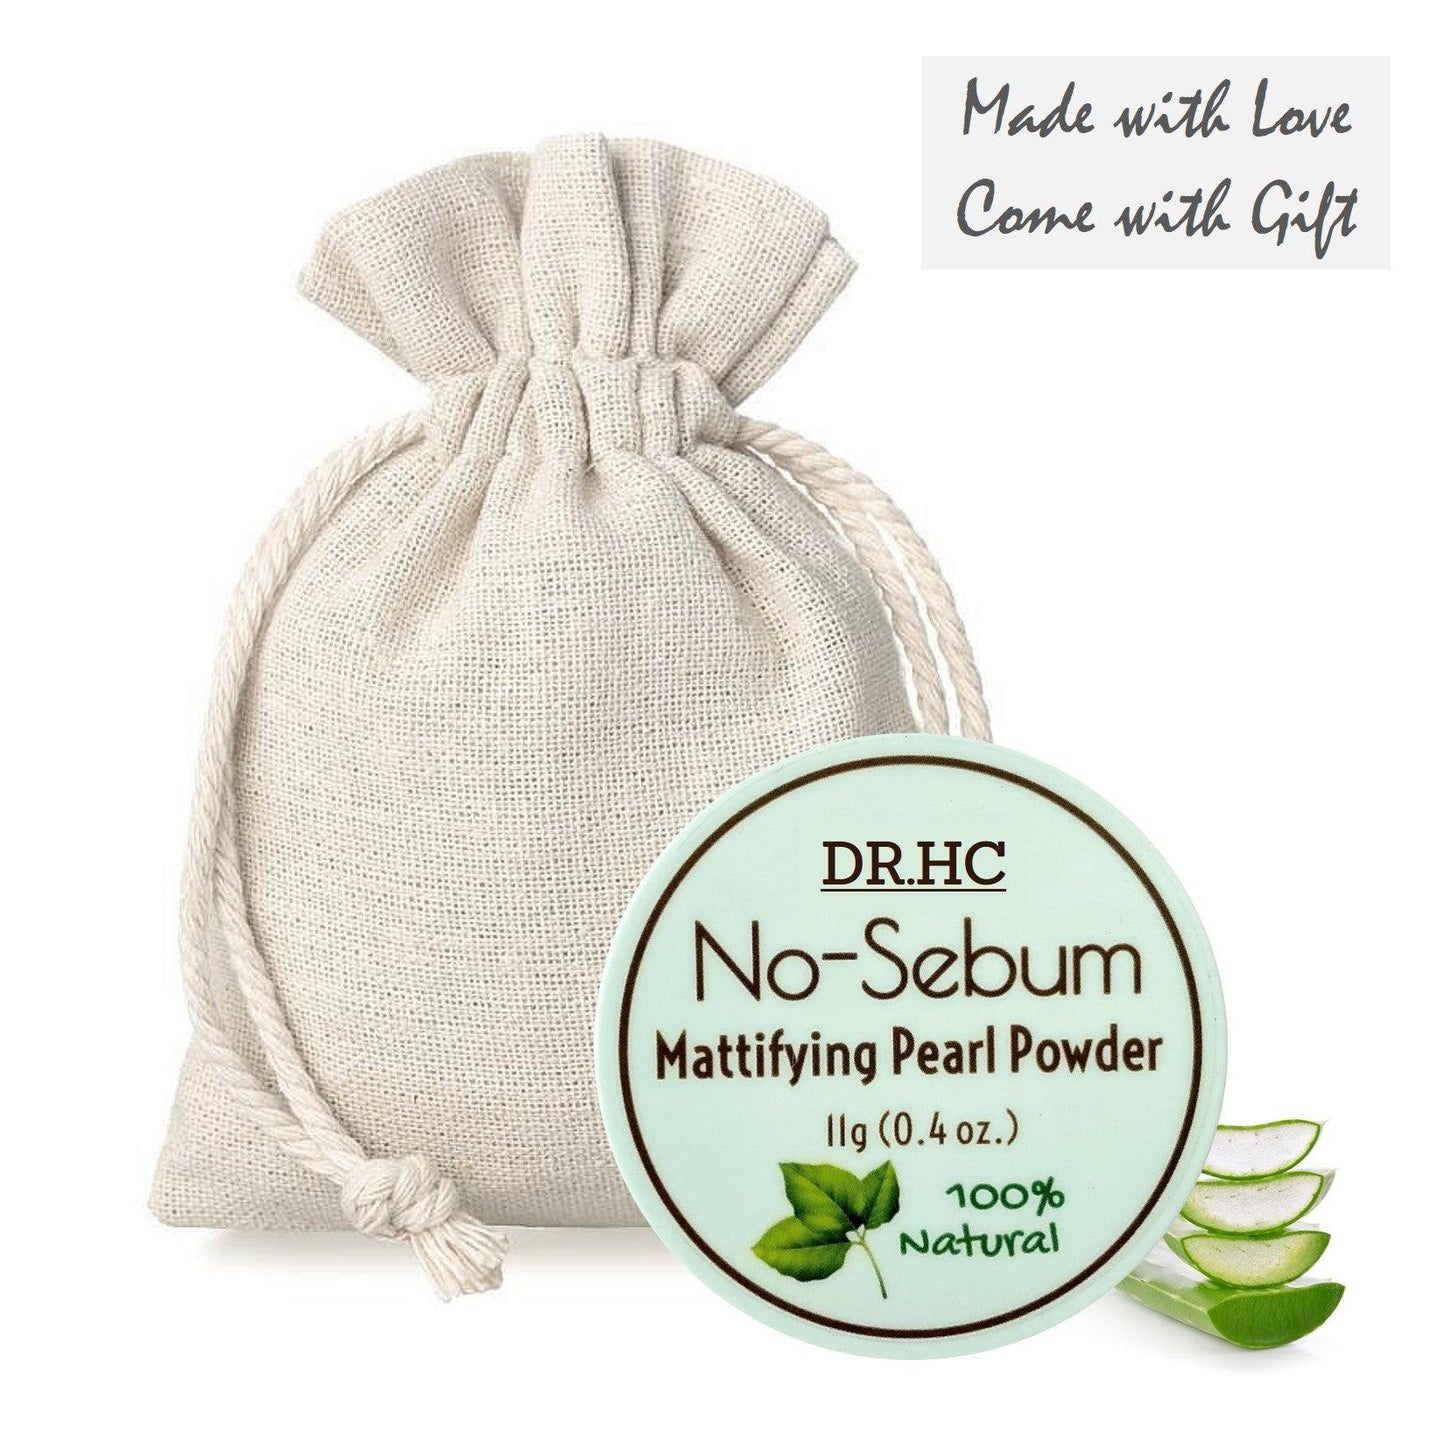 DR.HC No-Sebum Mattifying Pearl Powder (11g, 0.4oz.) (Setting Powder + Skincare Powder) (Skin brightening, Oil balancing, Pore shrinking, Anti-acne...)-2